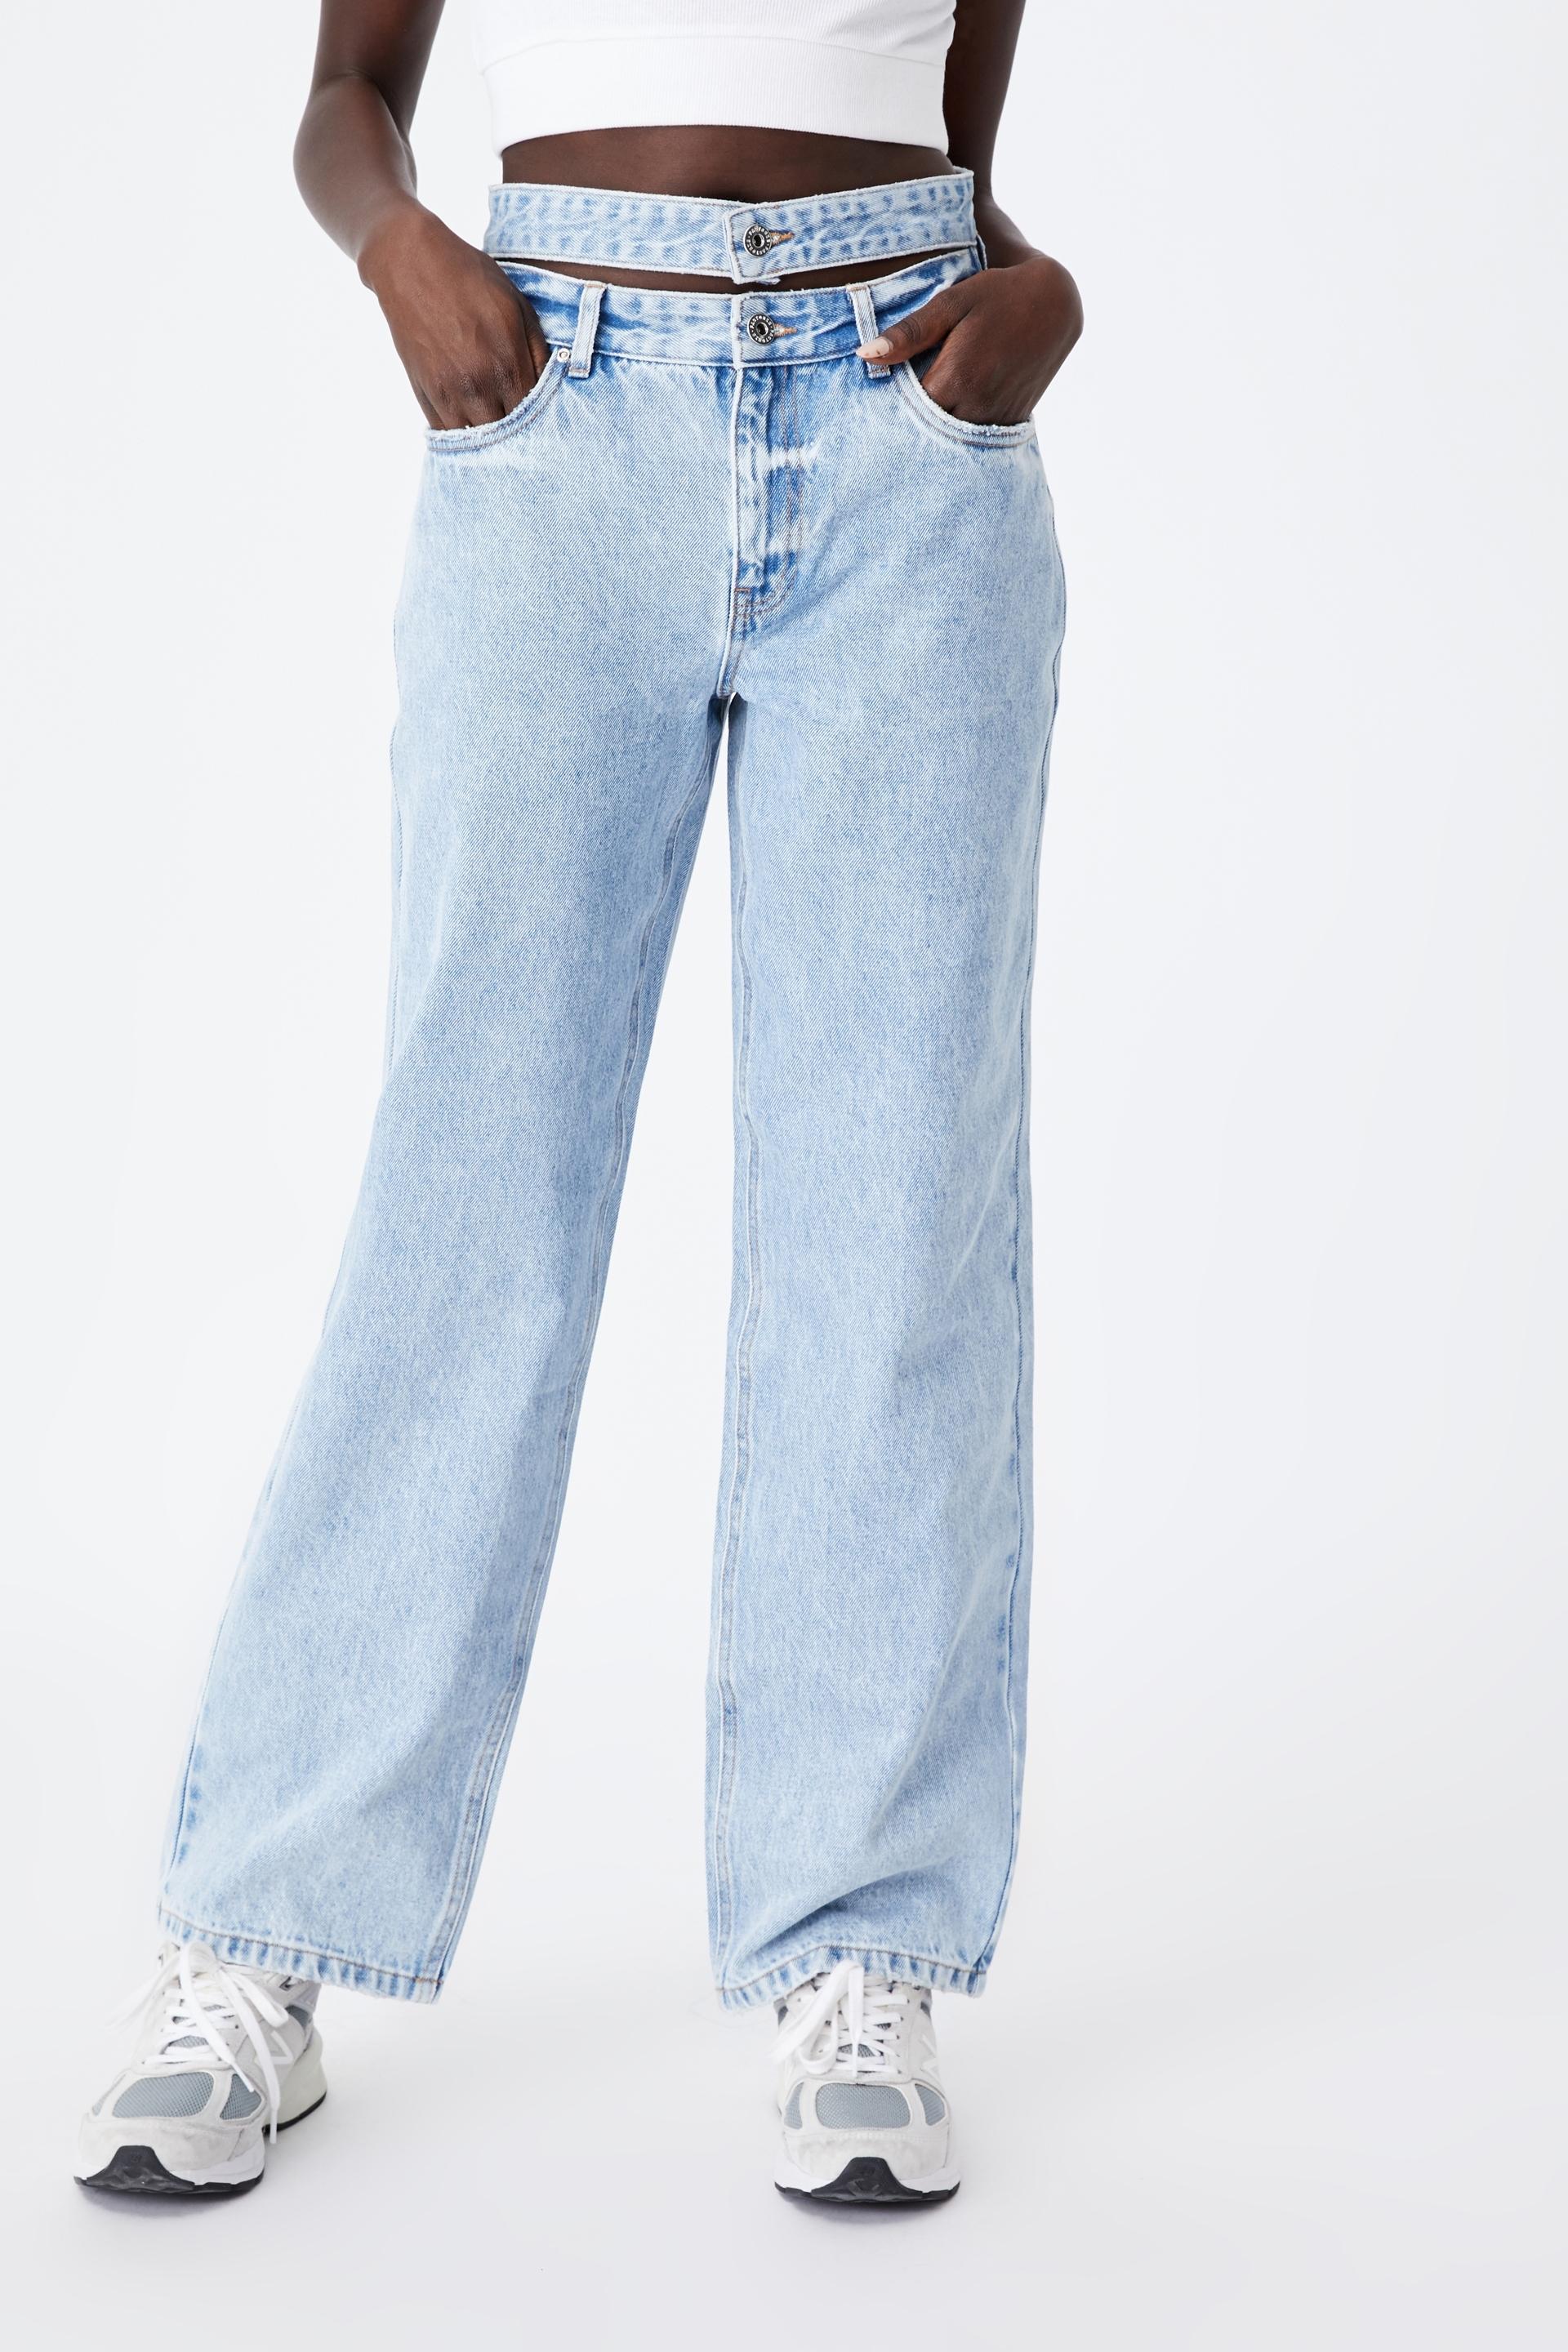 Double waistband jean - sunday blue Factorie Jeans | Superbalist.com